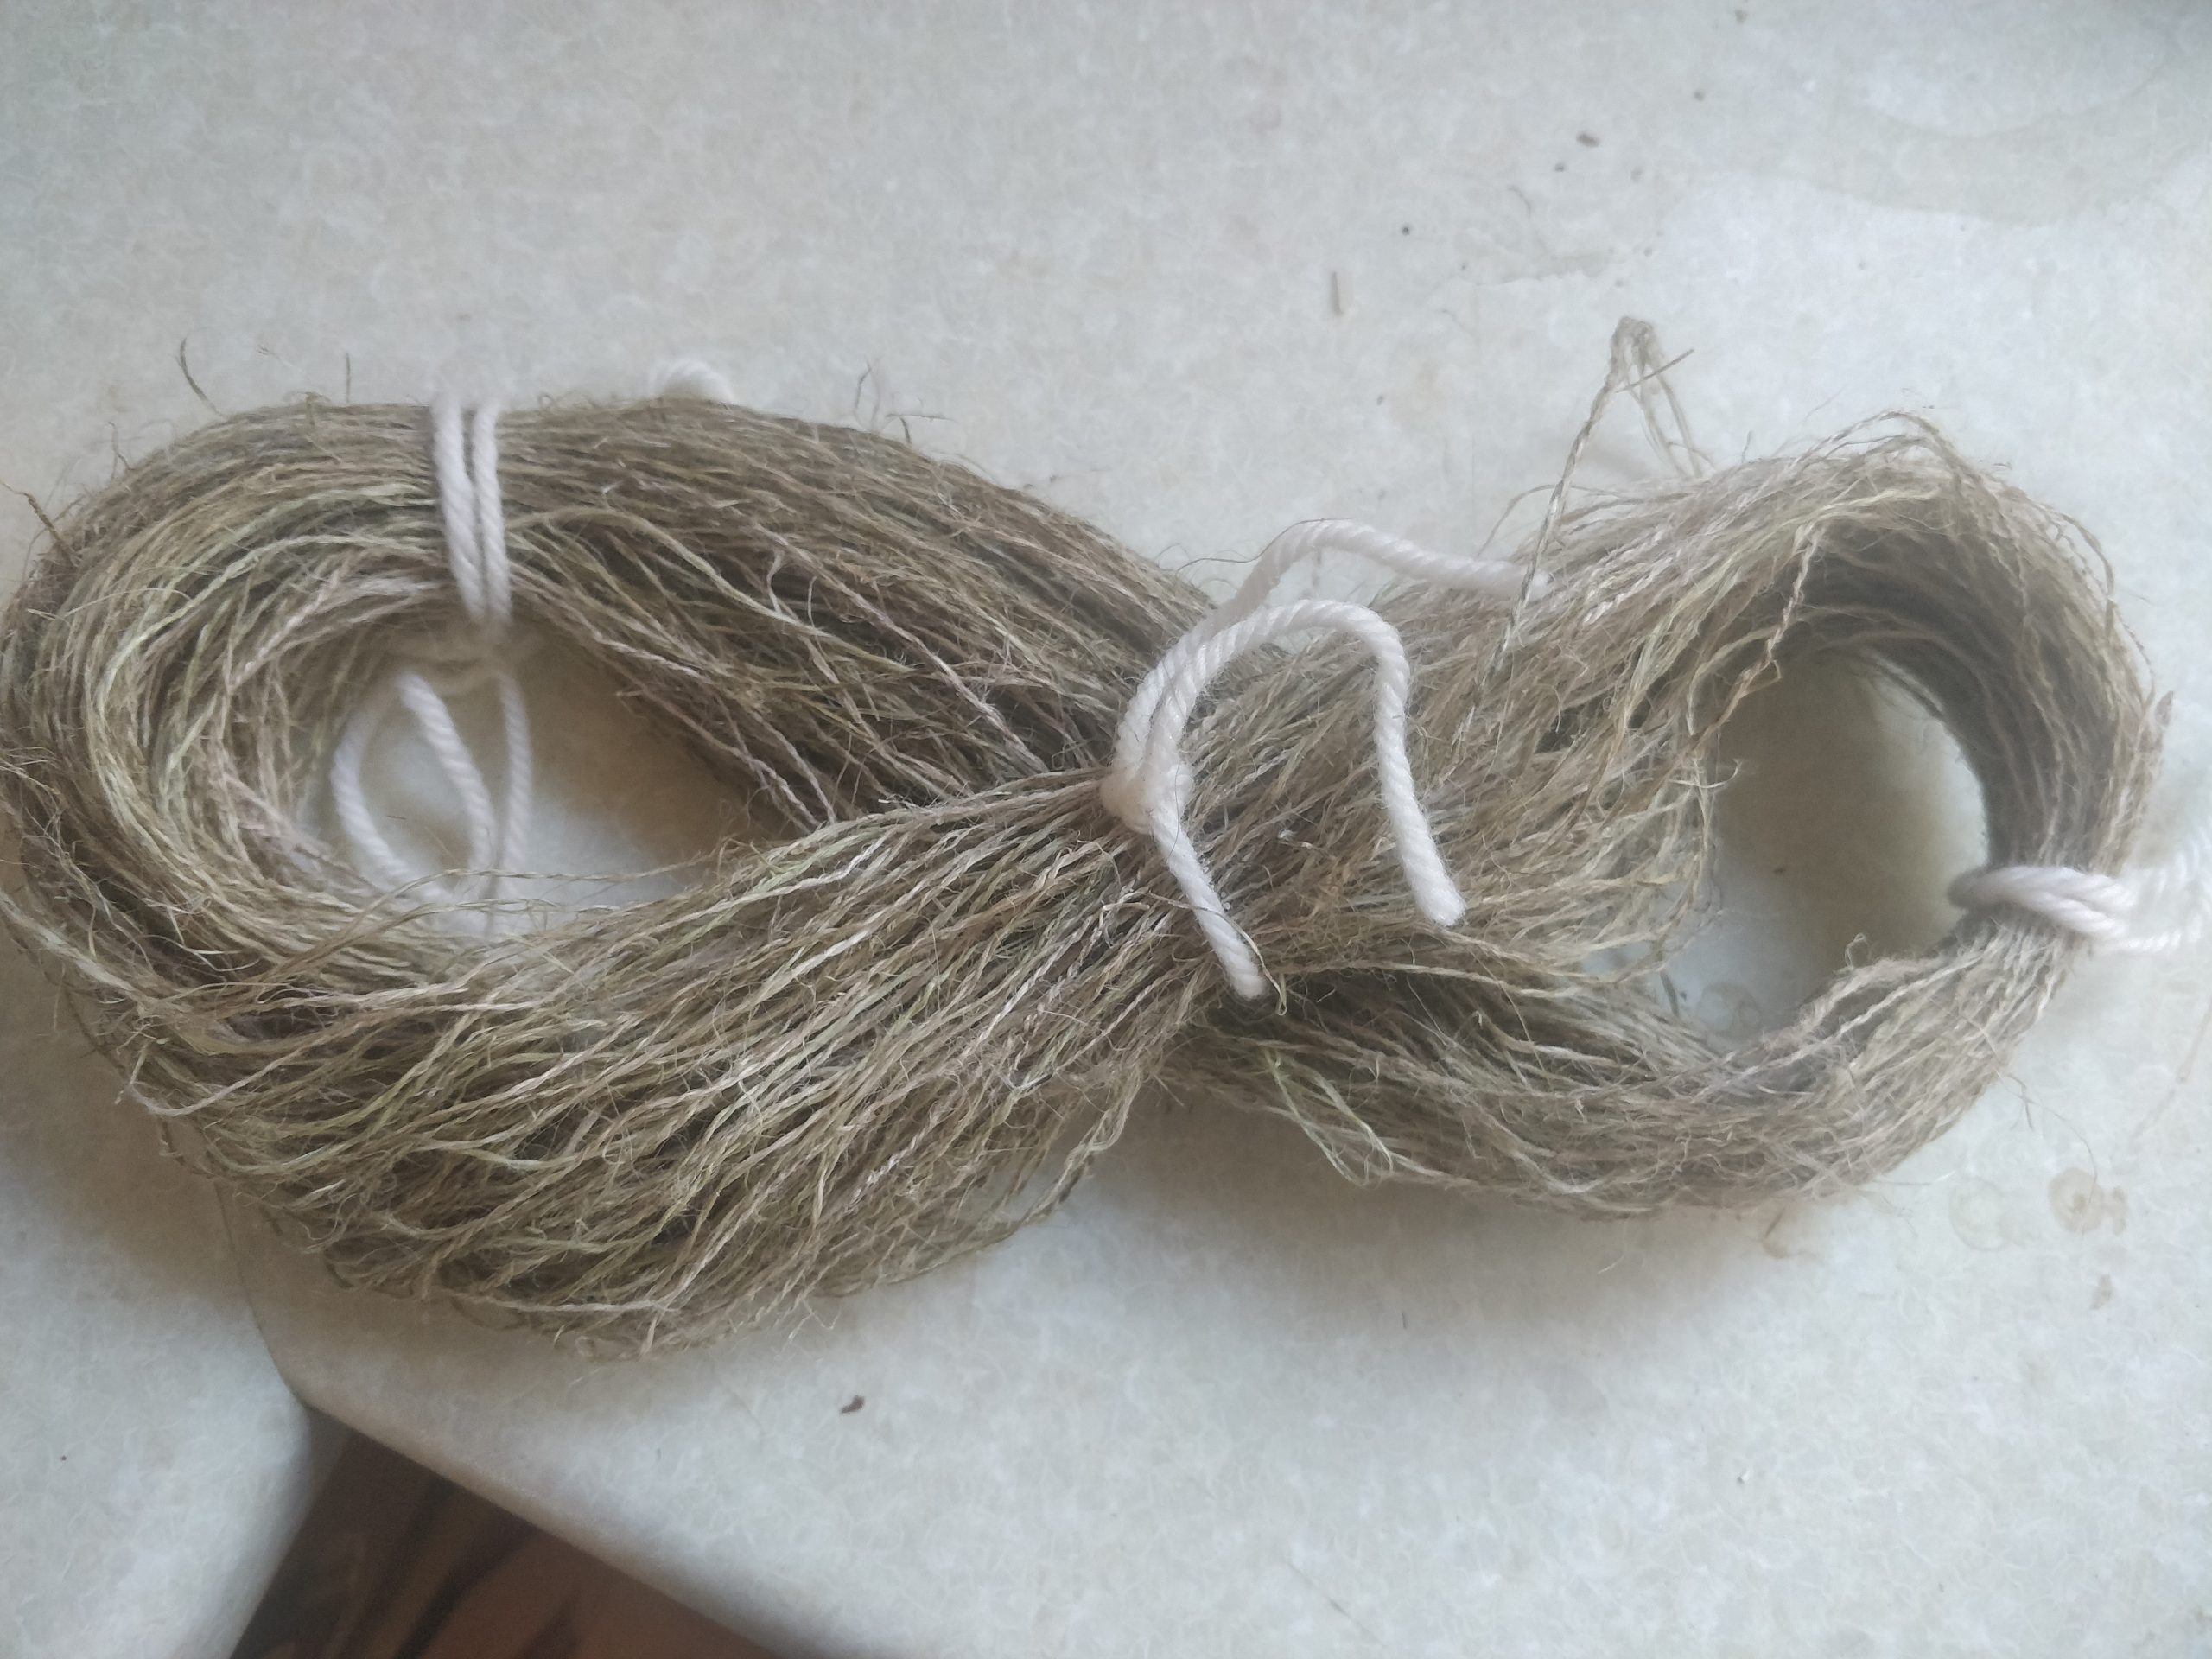 Nettle fibre